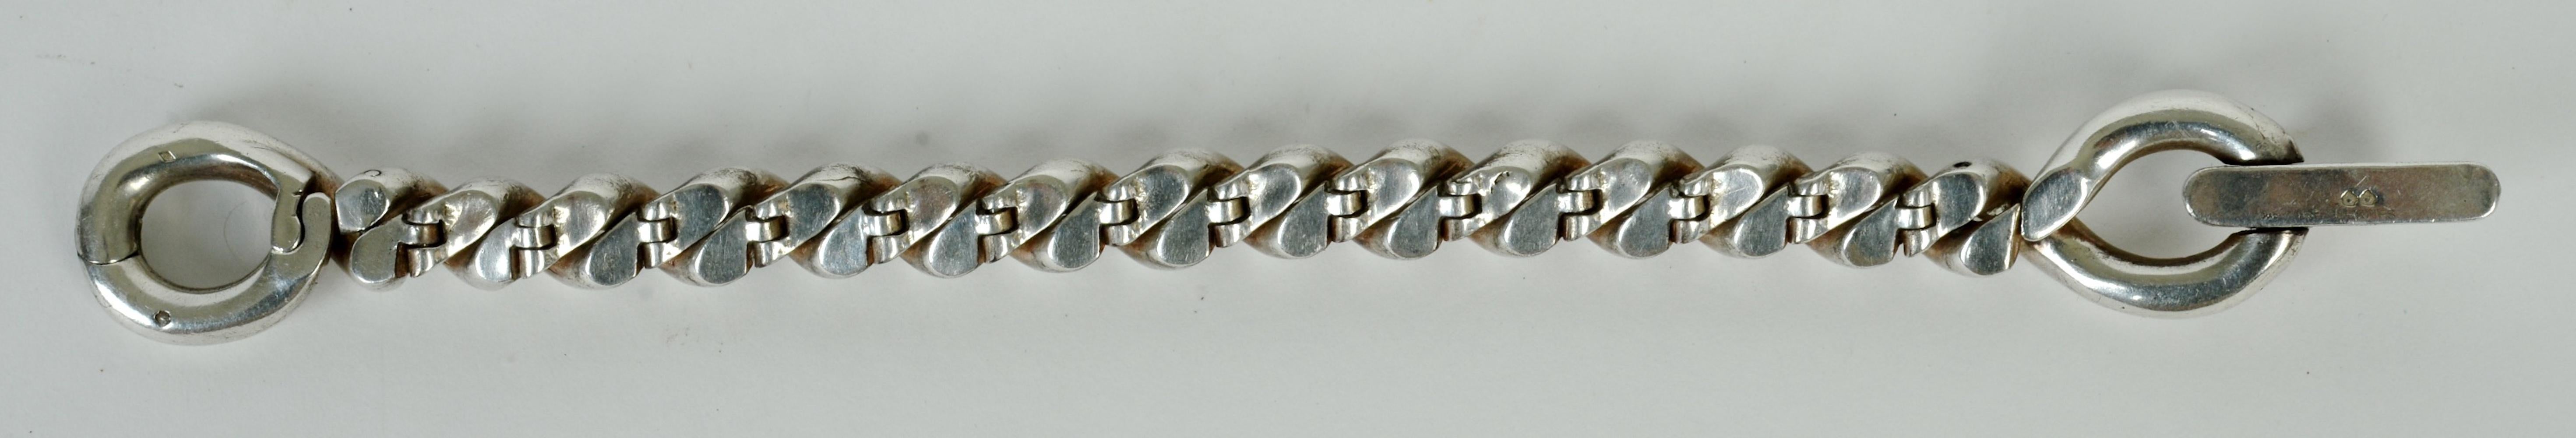 Hermès Silver Torsades Bracelet, c1990 In Good Condition In valatie, NY